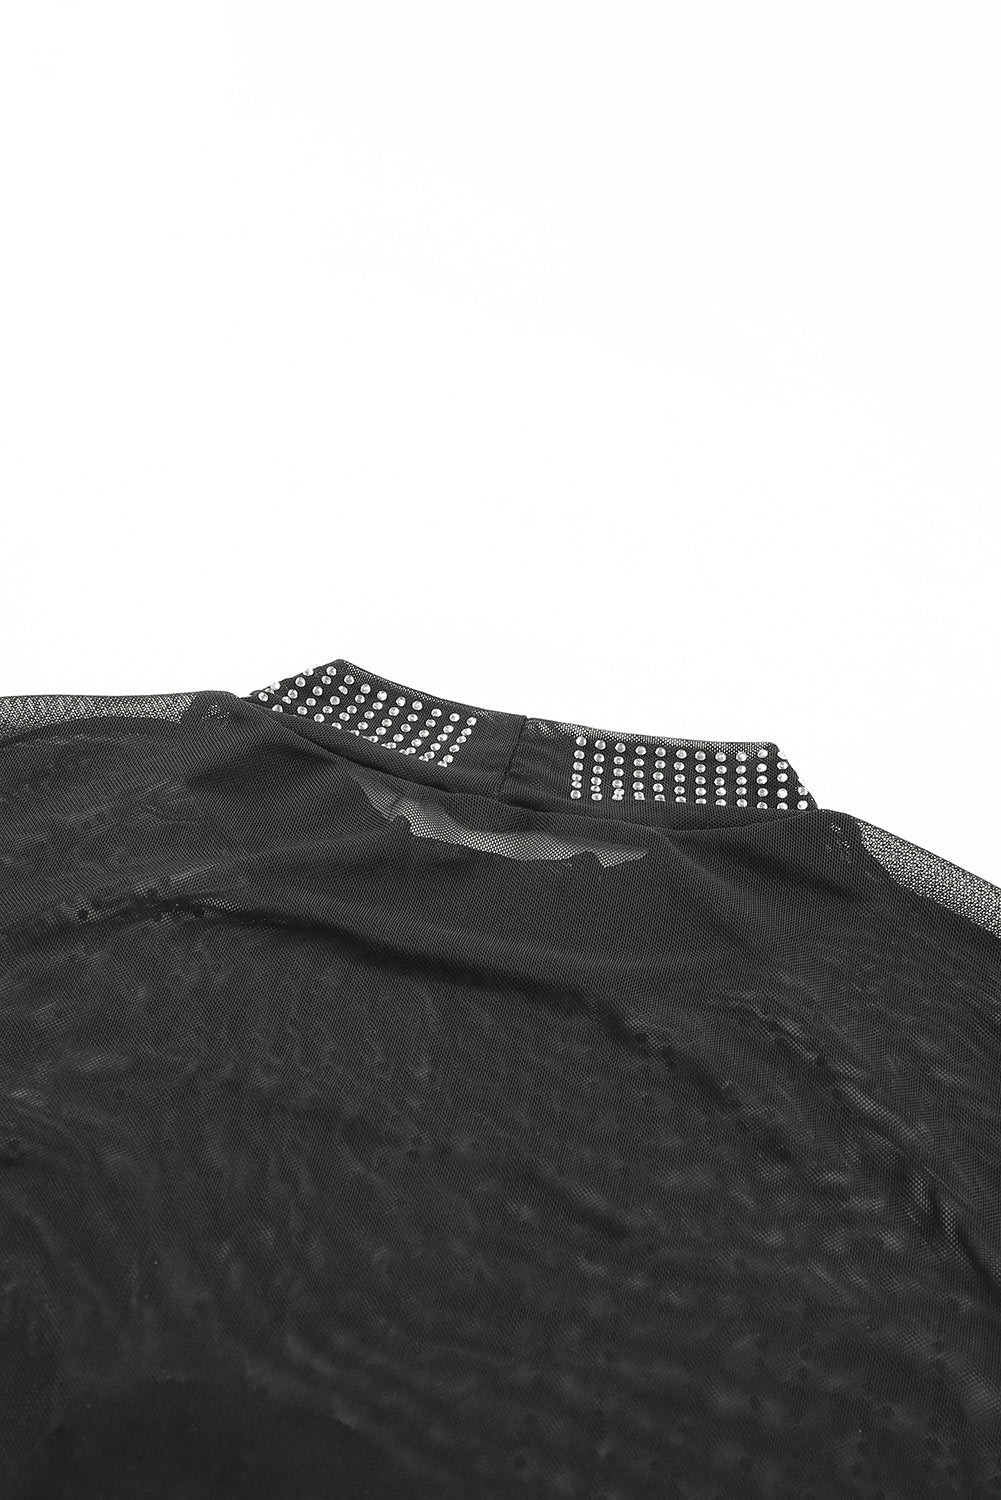 Black Rhinestone Sheer Mesh Long Sleeve Bodysuit